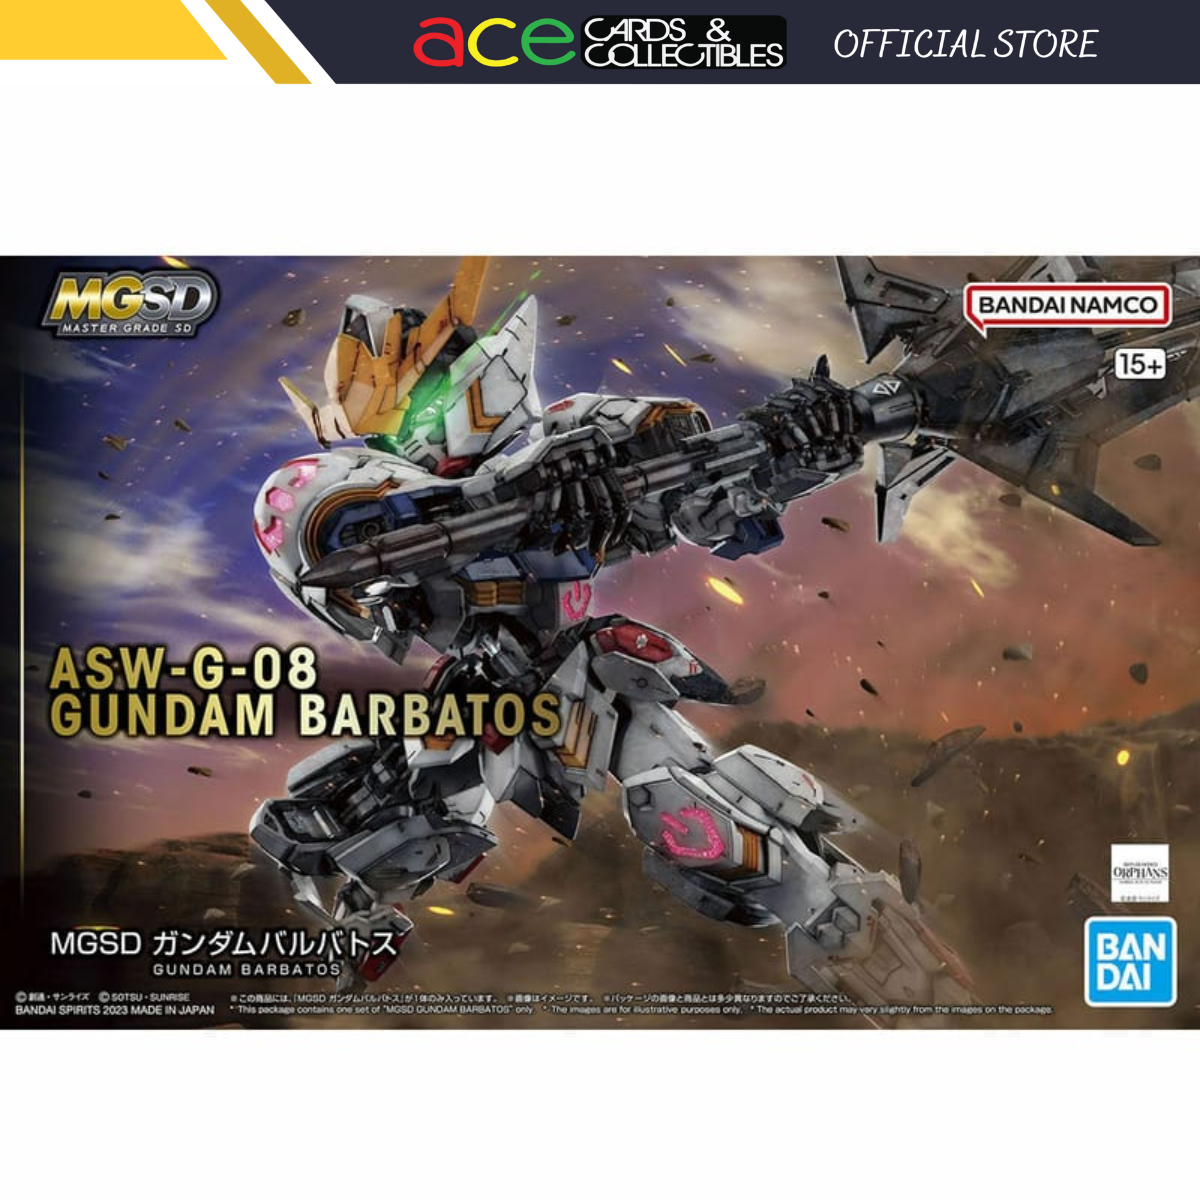 Gunpla MGSD Gundam Barbatos-Bandai-Ace Cards & Collectibles